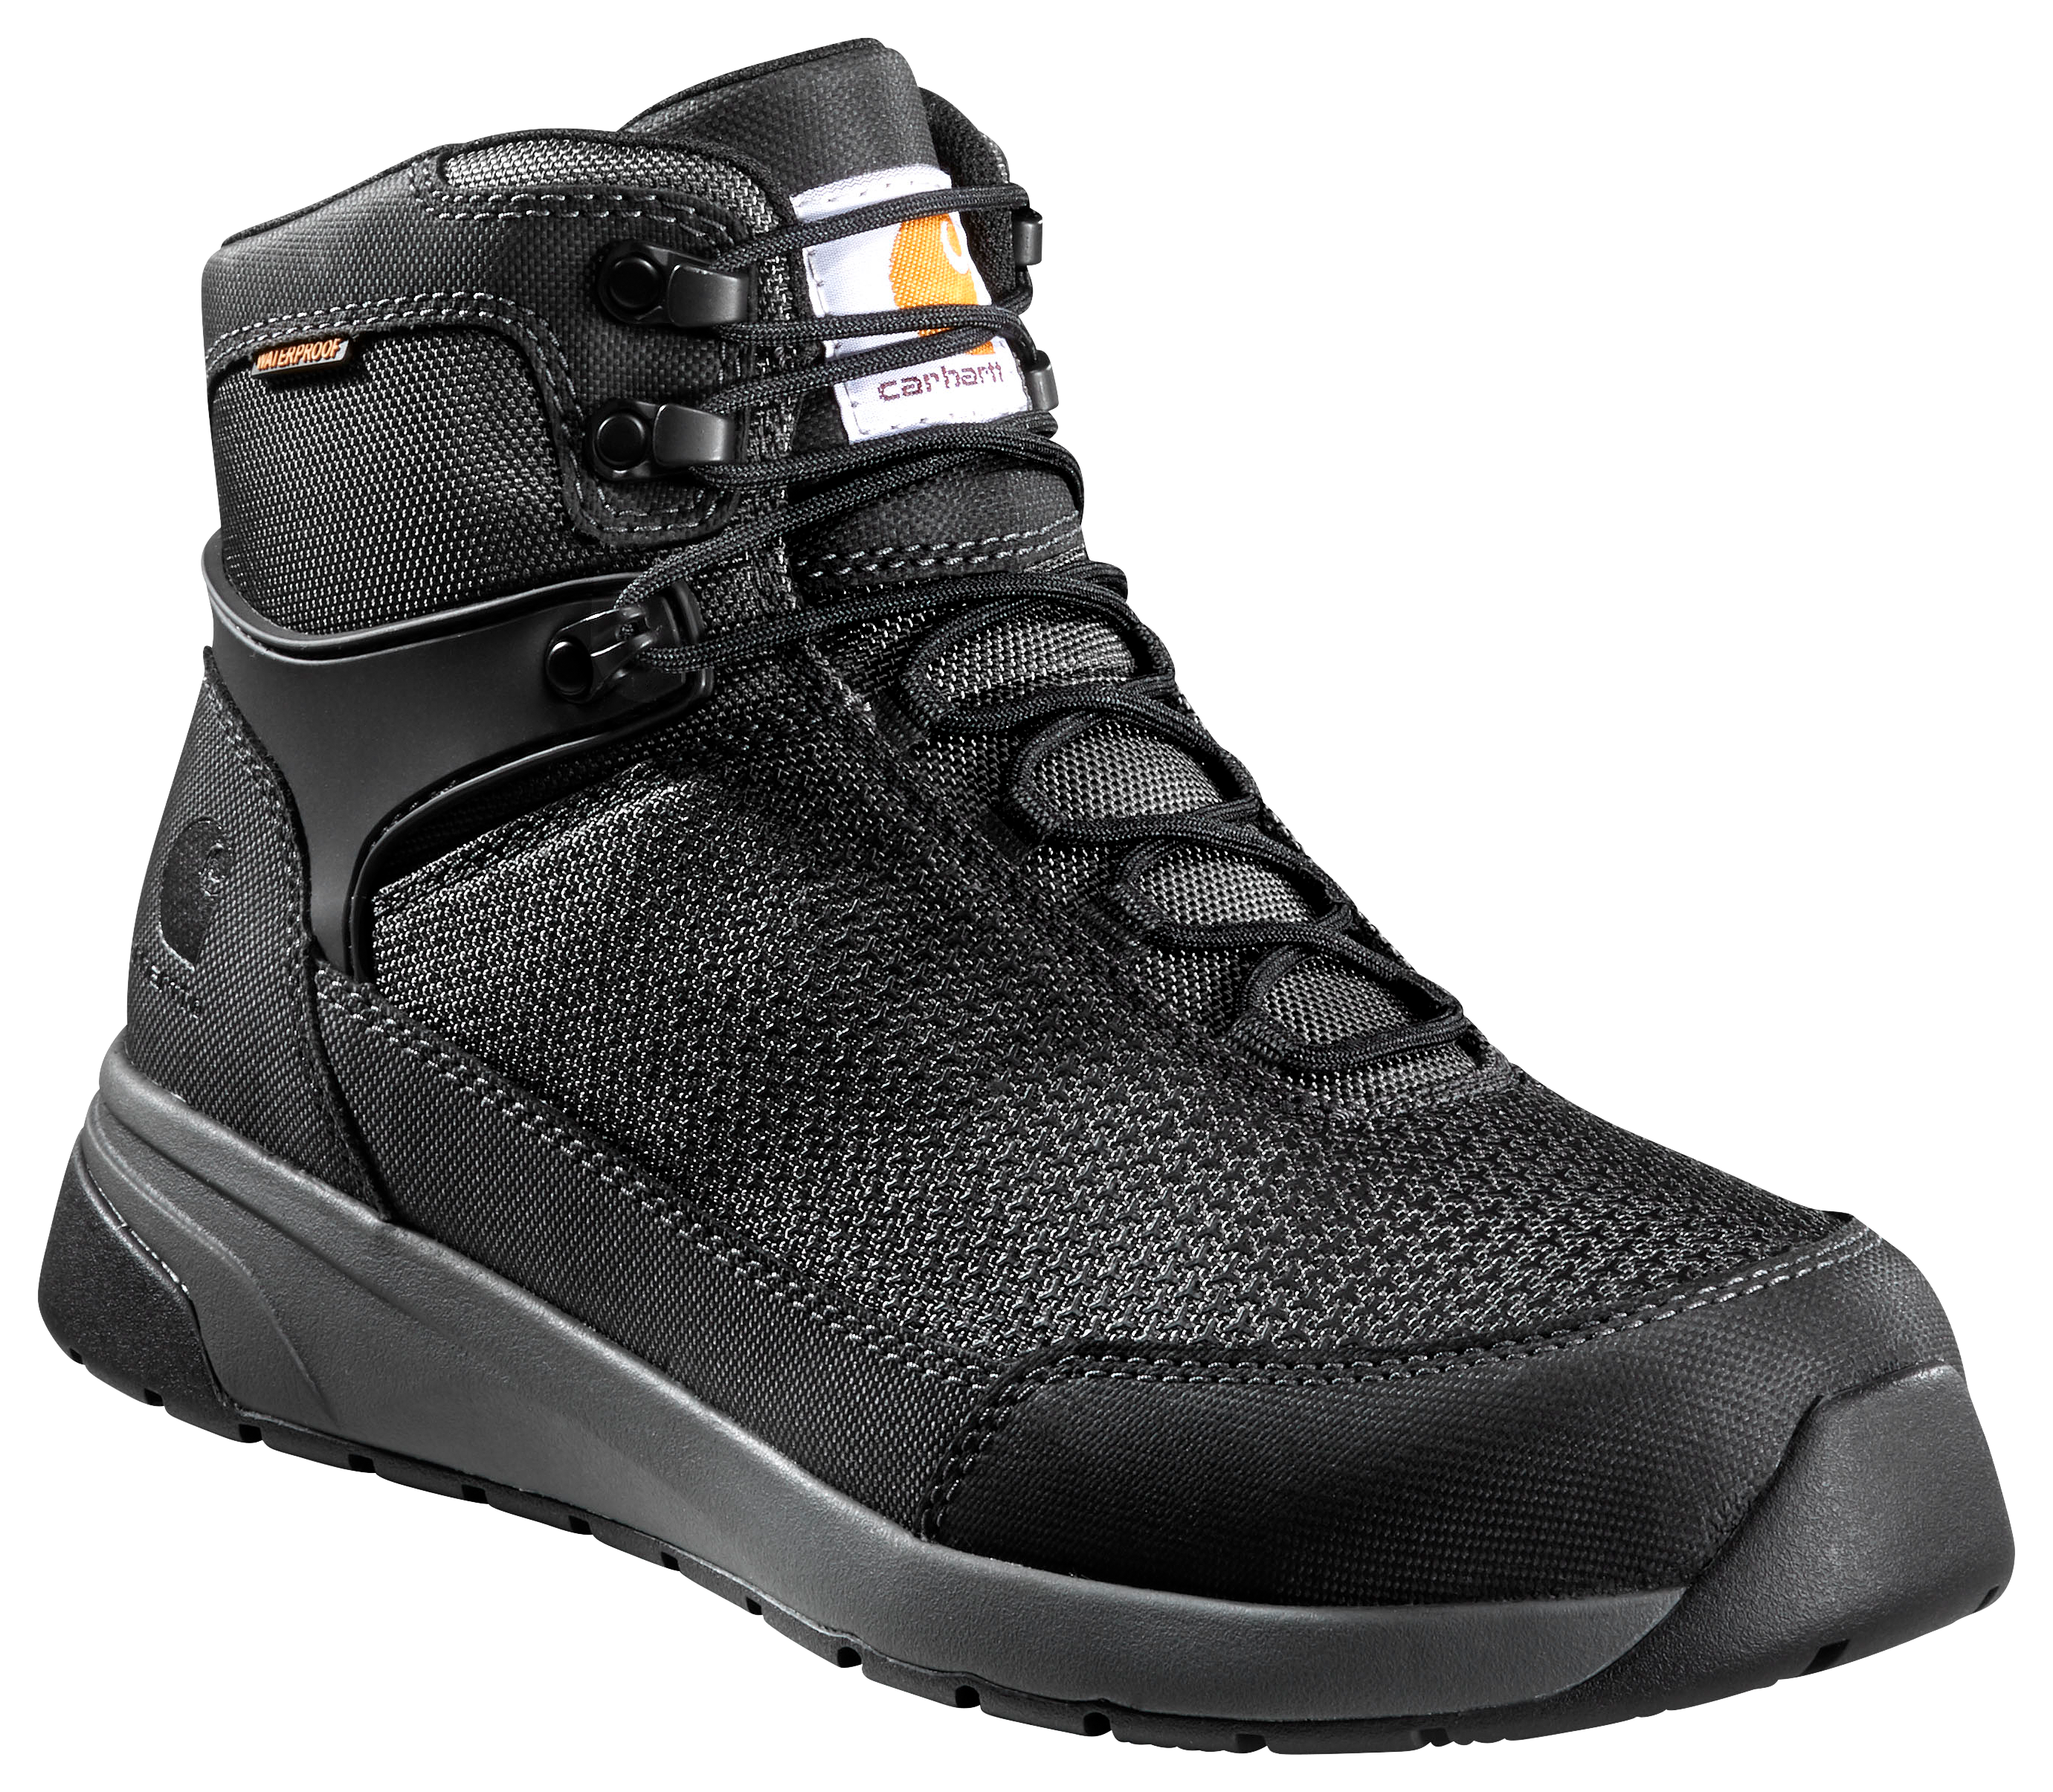 Carhartt Force 6"" Nano Composite-Toe Work Boots for Men - Black - 10.5W